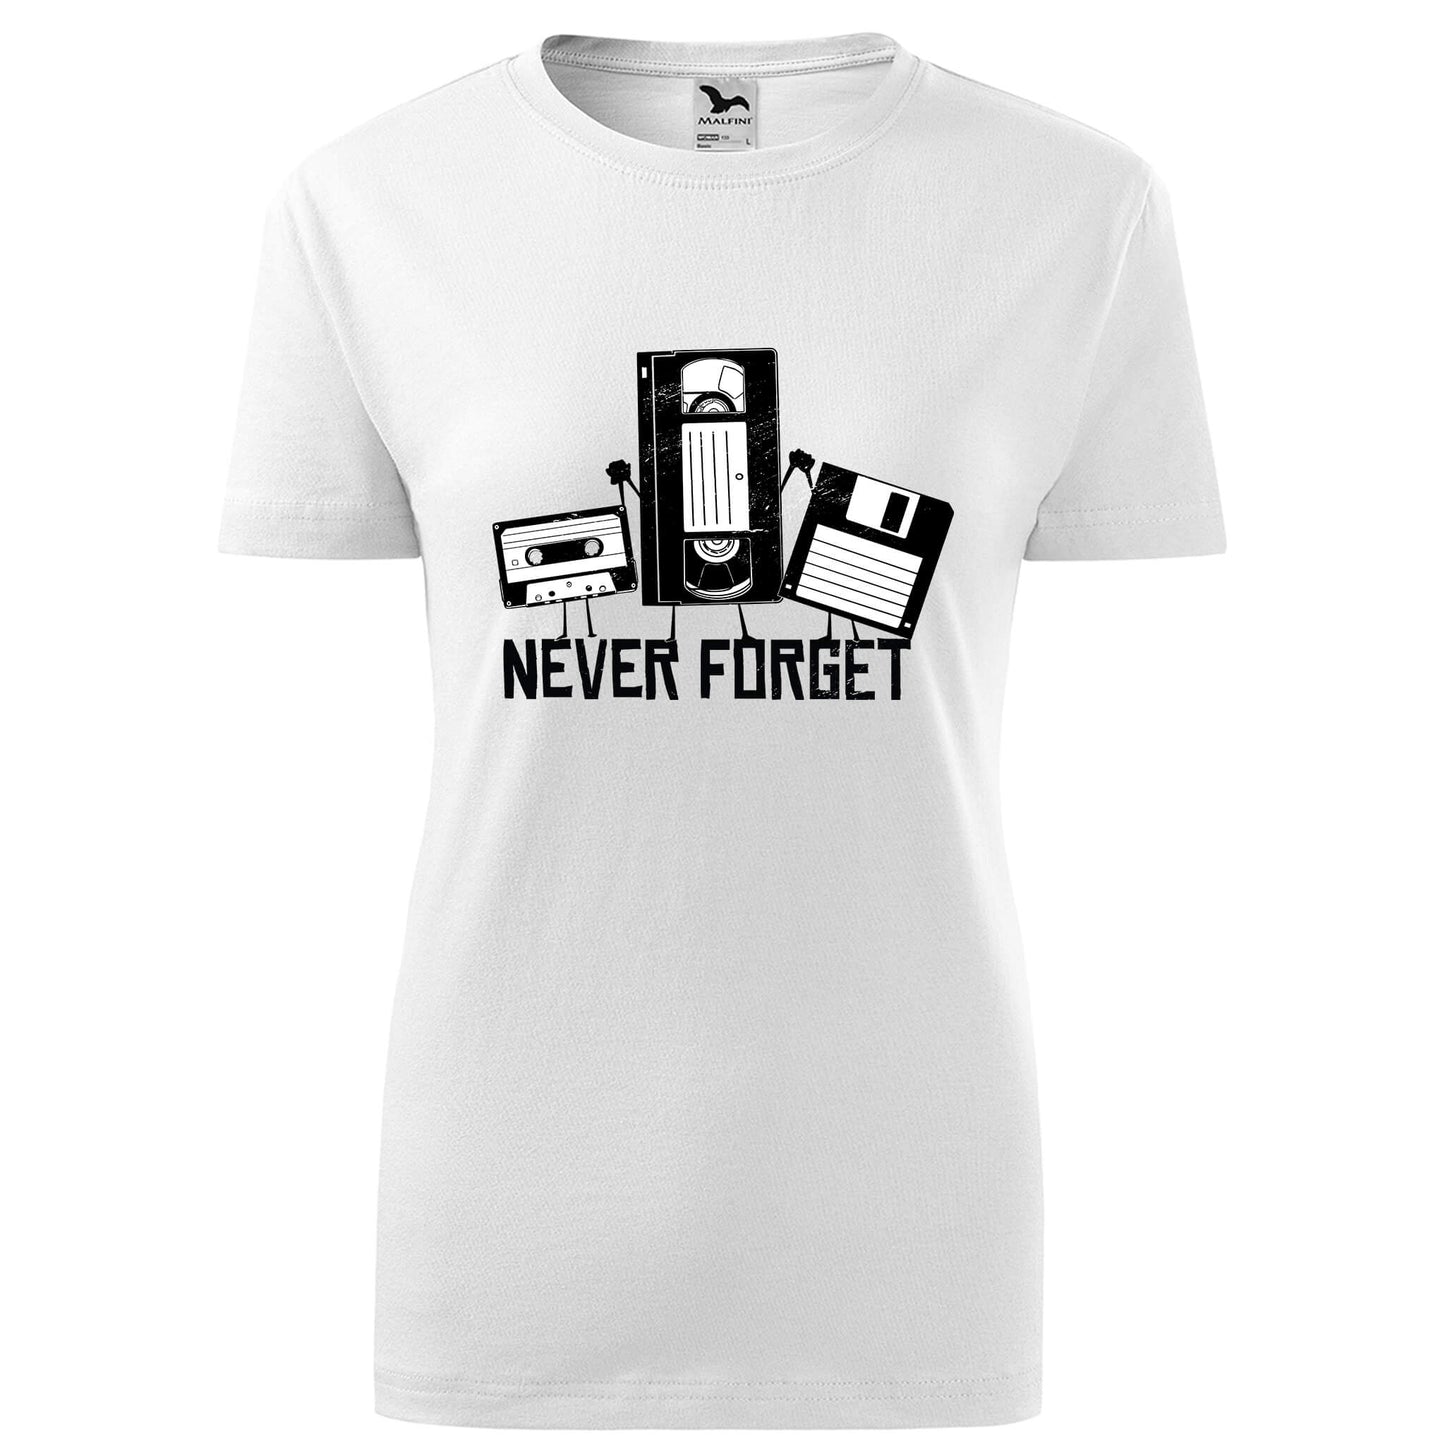 Never forget t-shirt - rvdesignprint